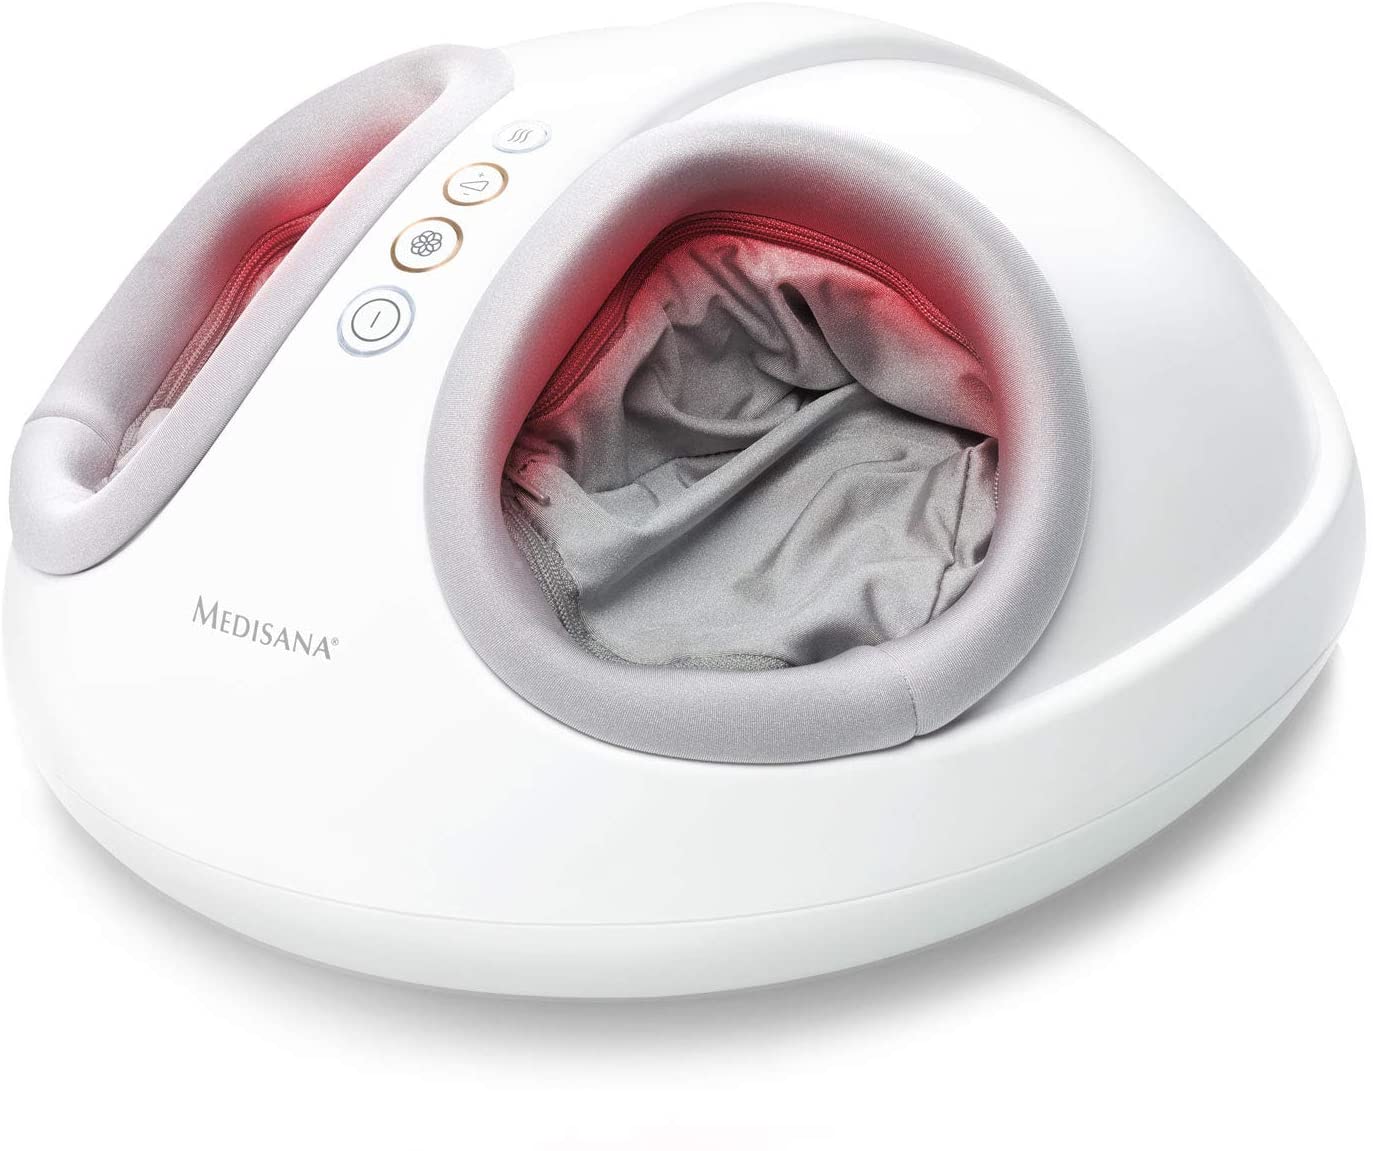 Medisana Fm 888 Shiatsu Electric Foot Massaging Device, Red Light Function,